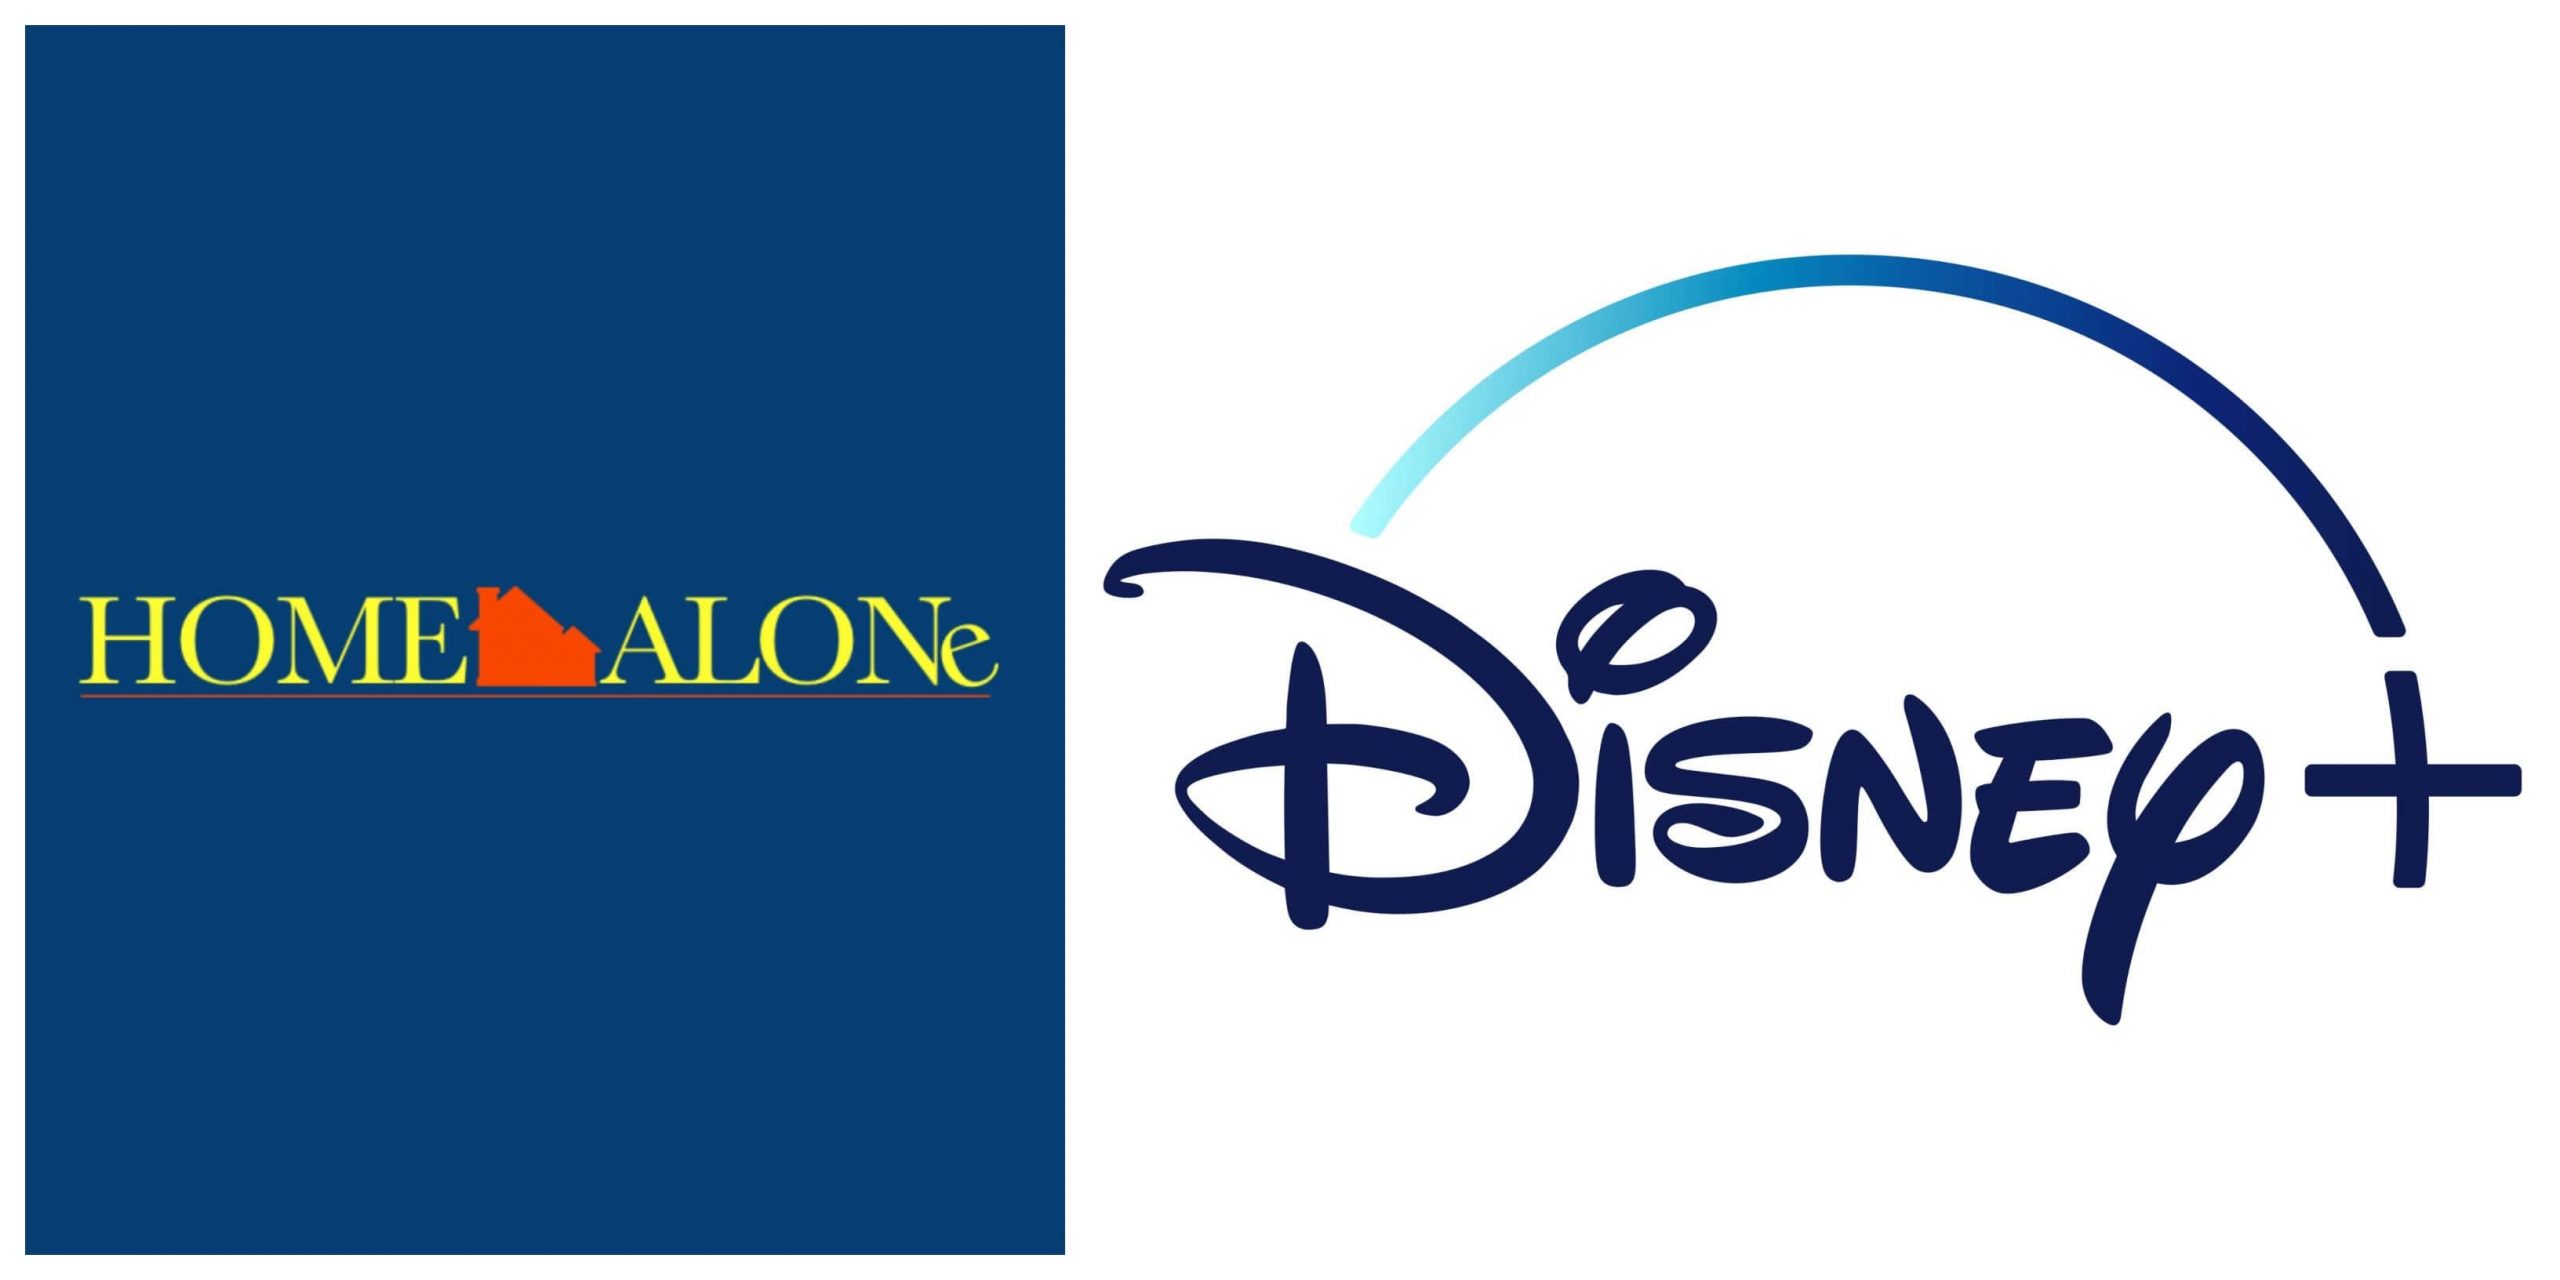 Disney+ Home Alone Reboot cast is growing